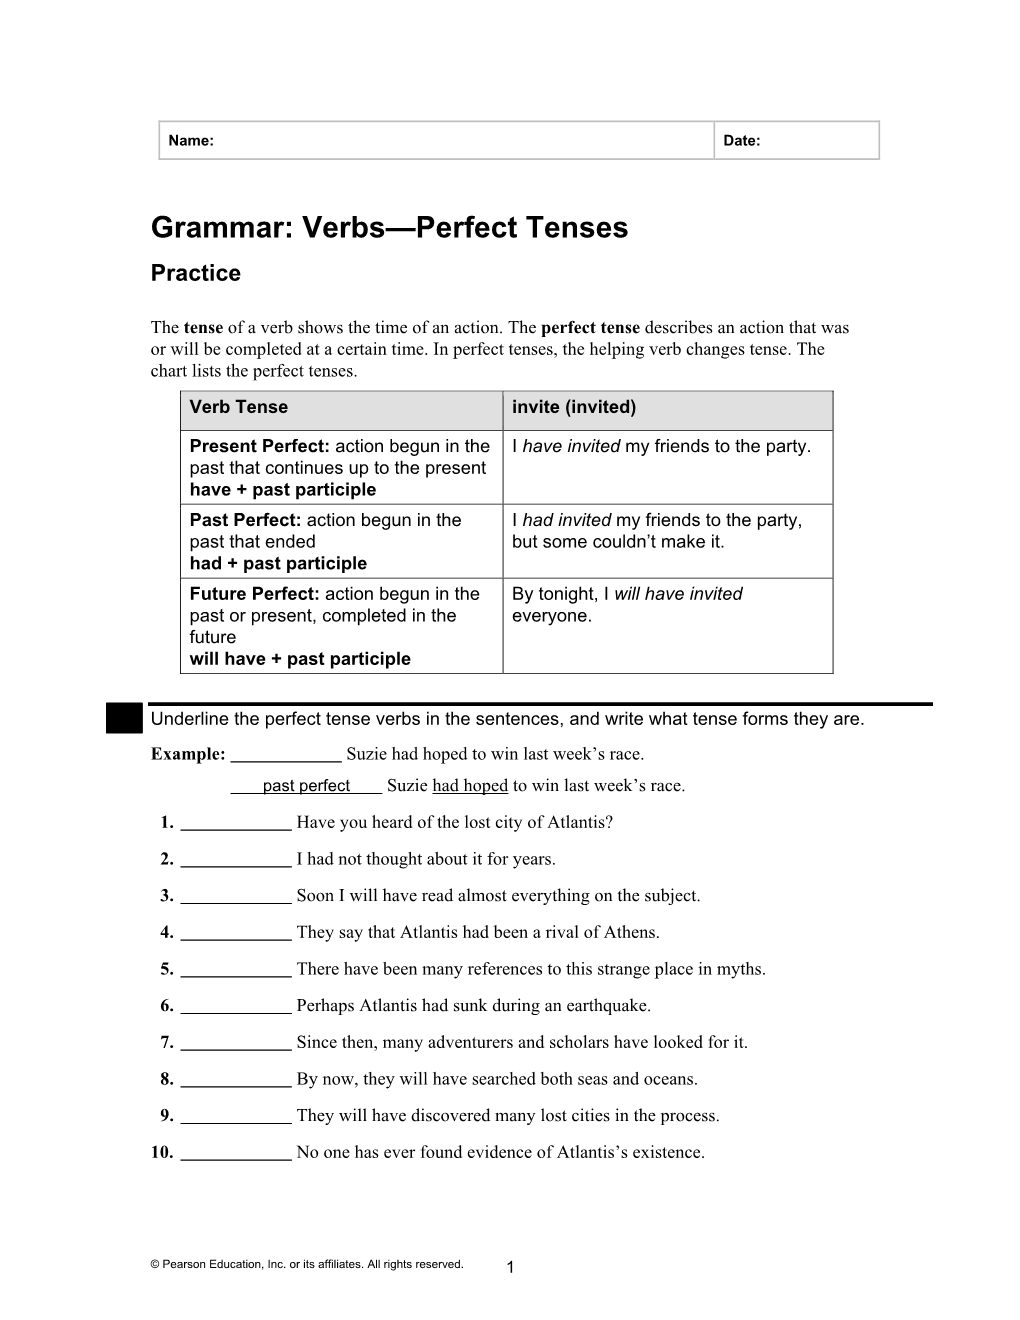 grammar-verbs-perfect-tenses-practice-docslib